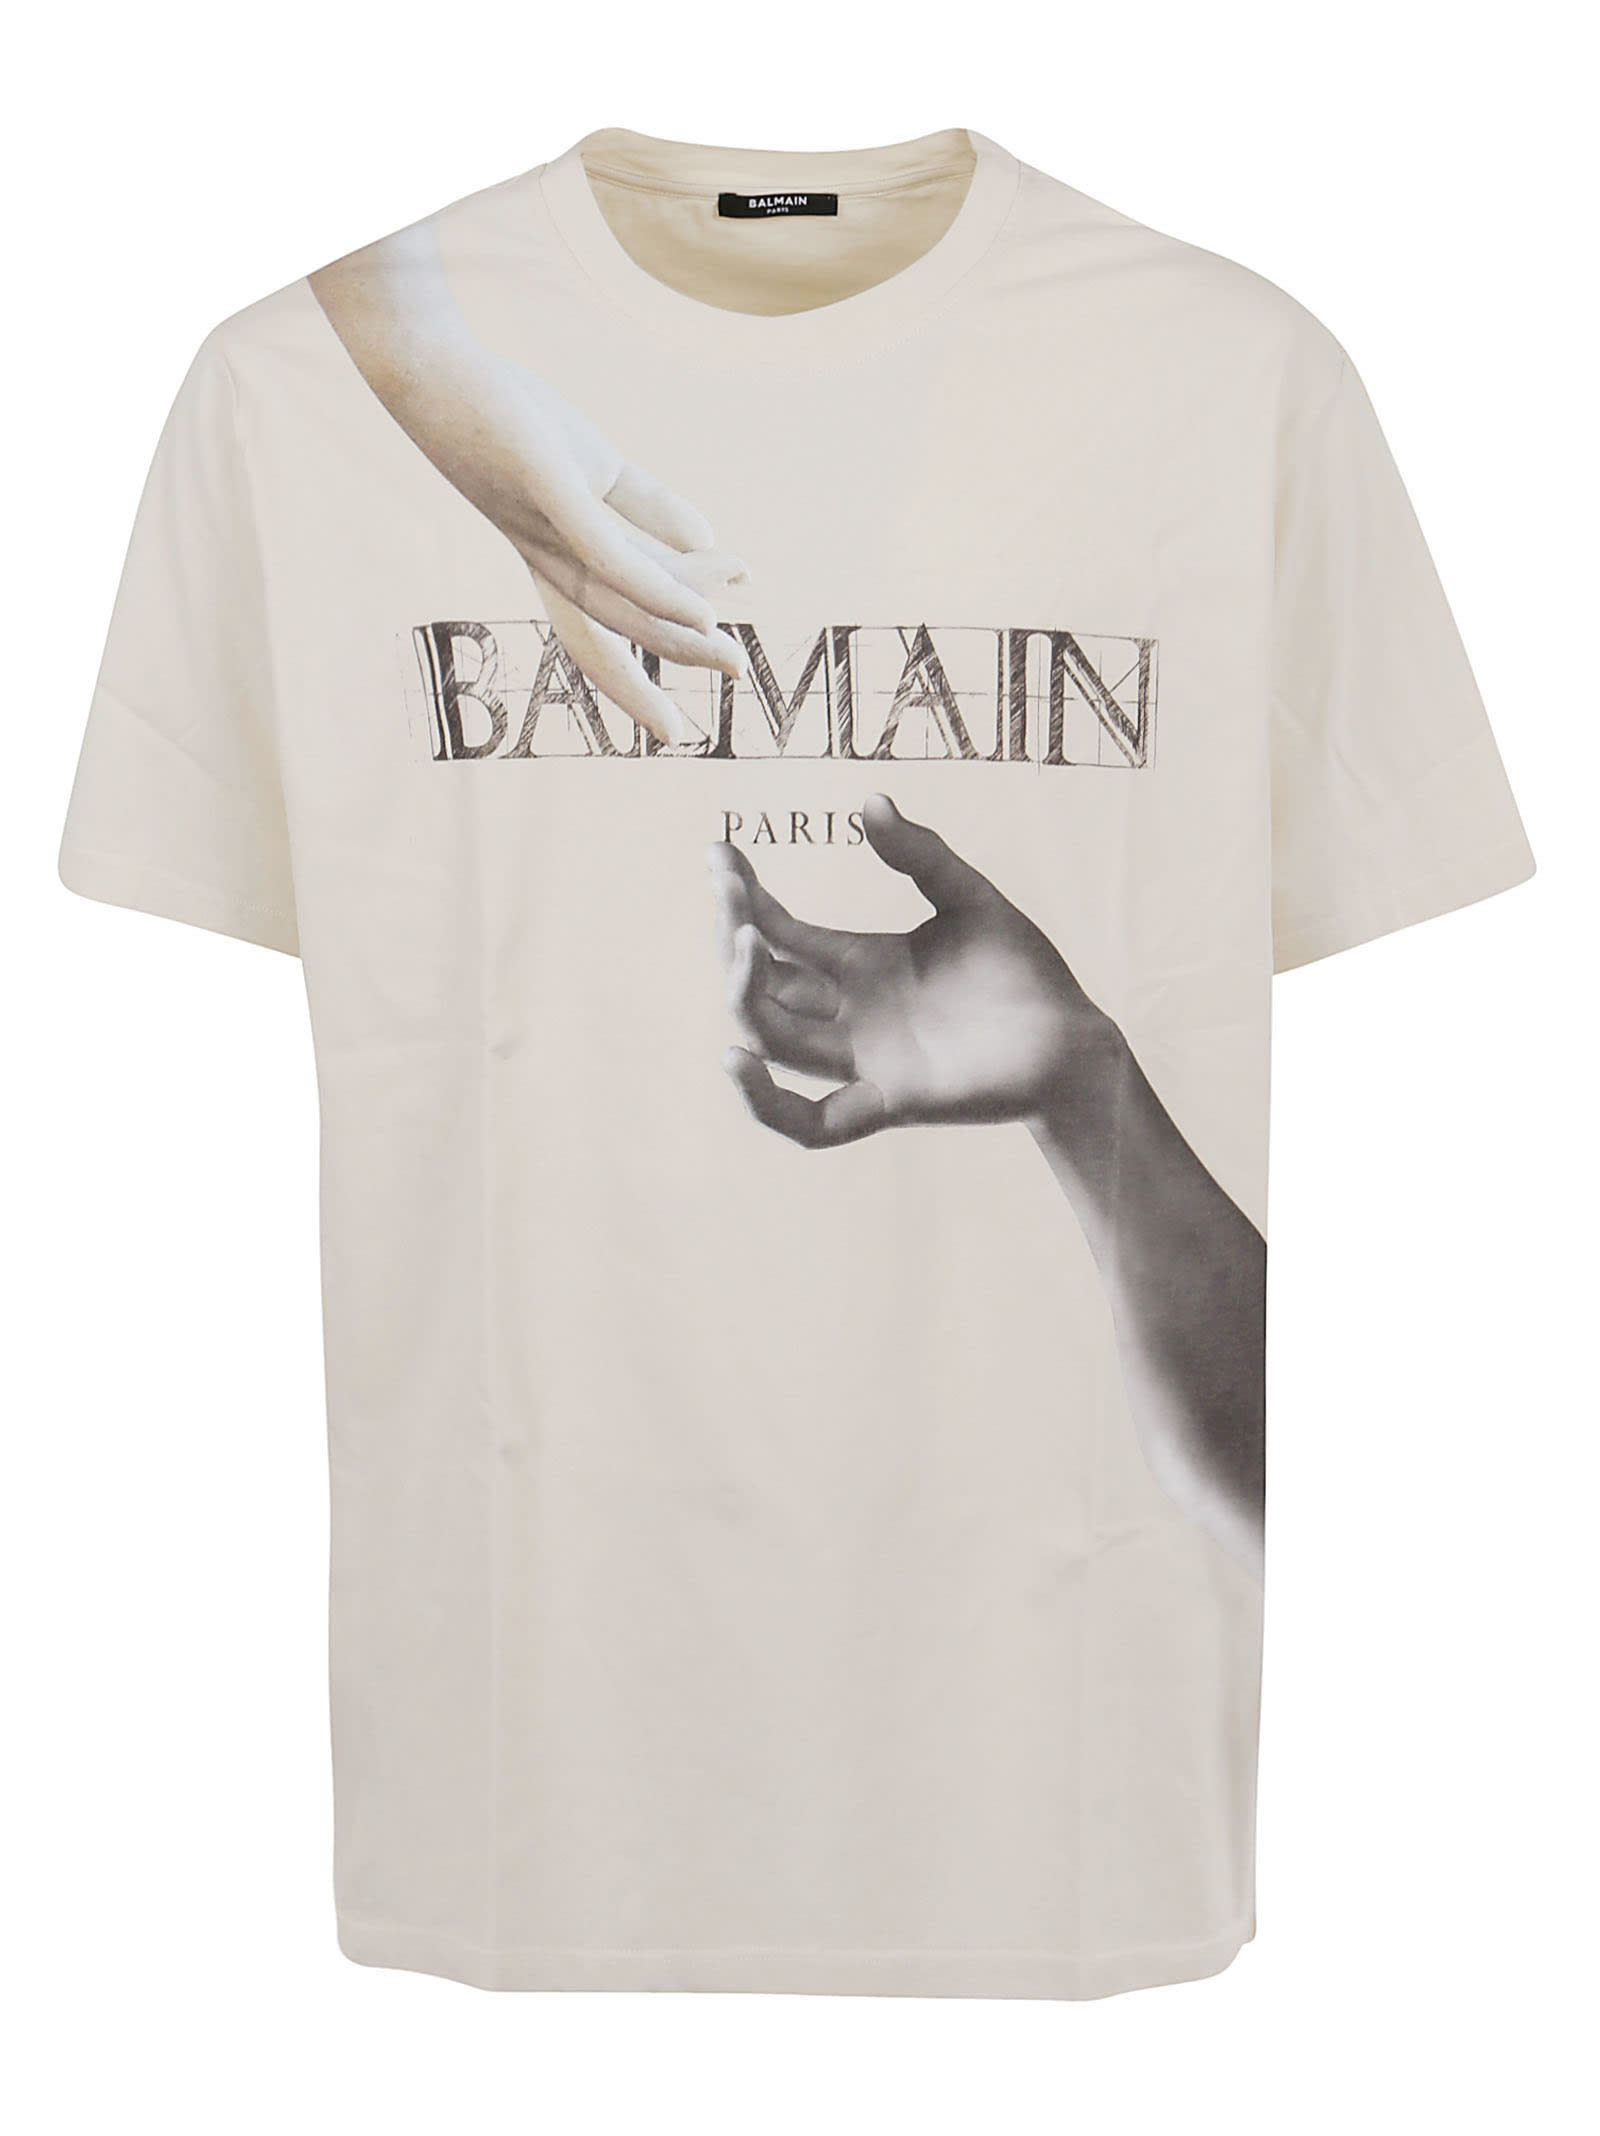 Balmain Statue Printed T-shirt - Bulky Fit